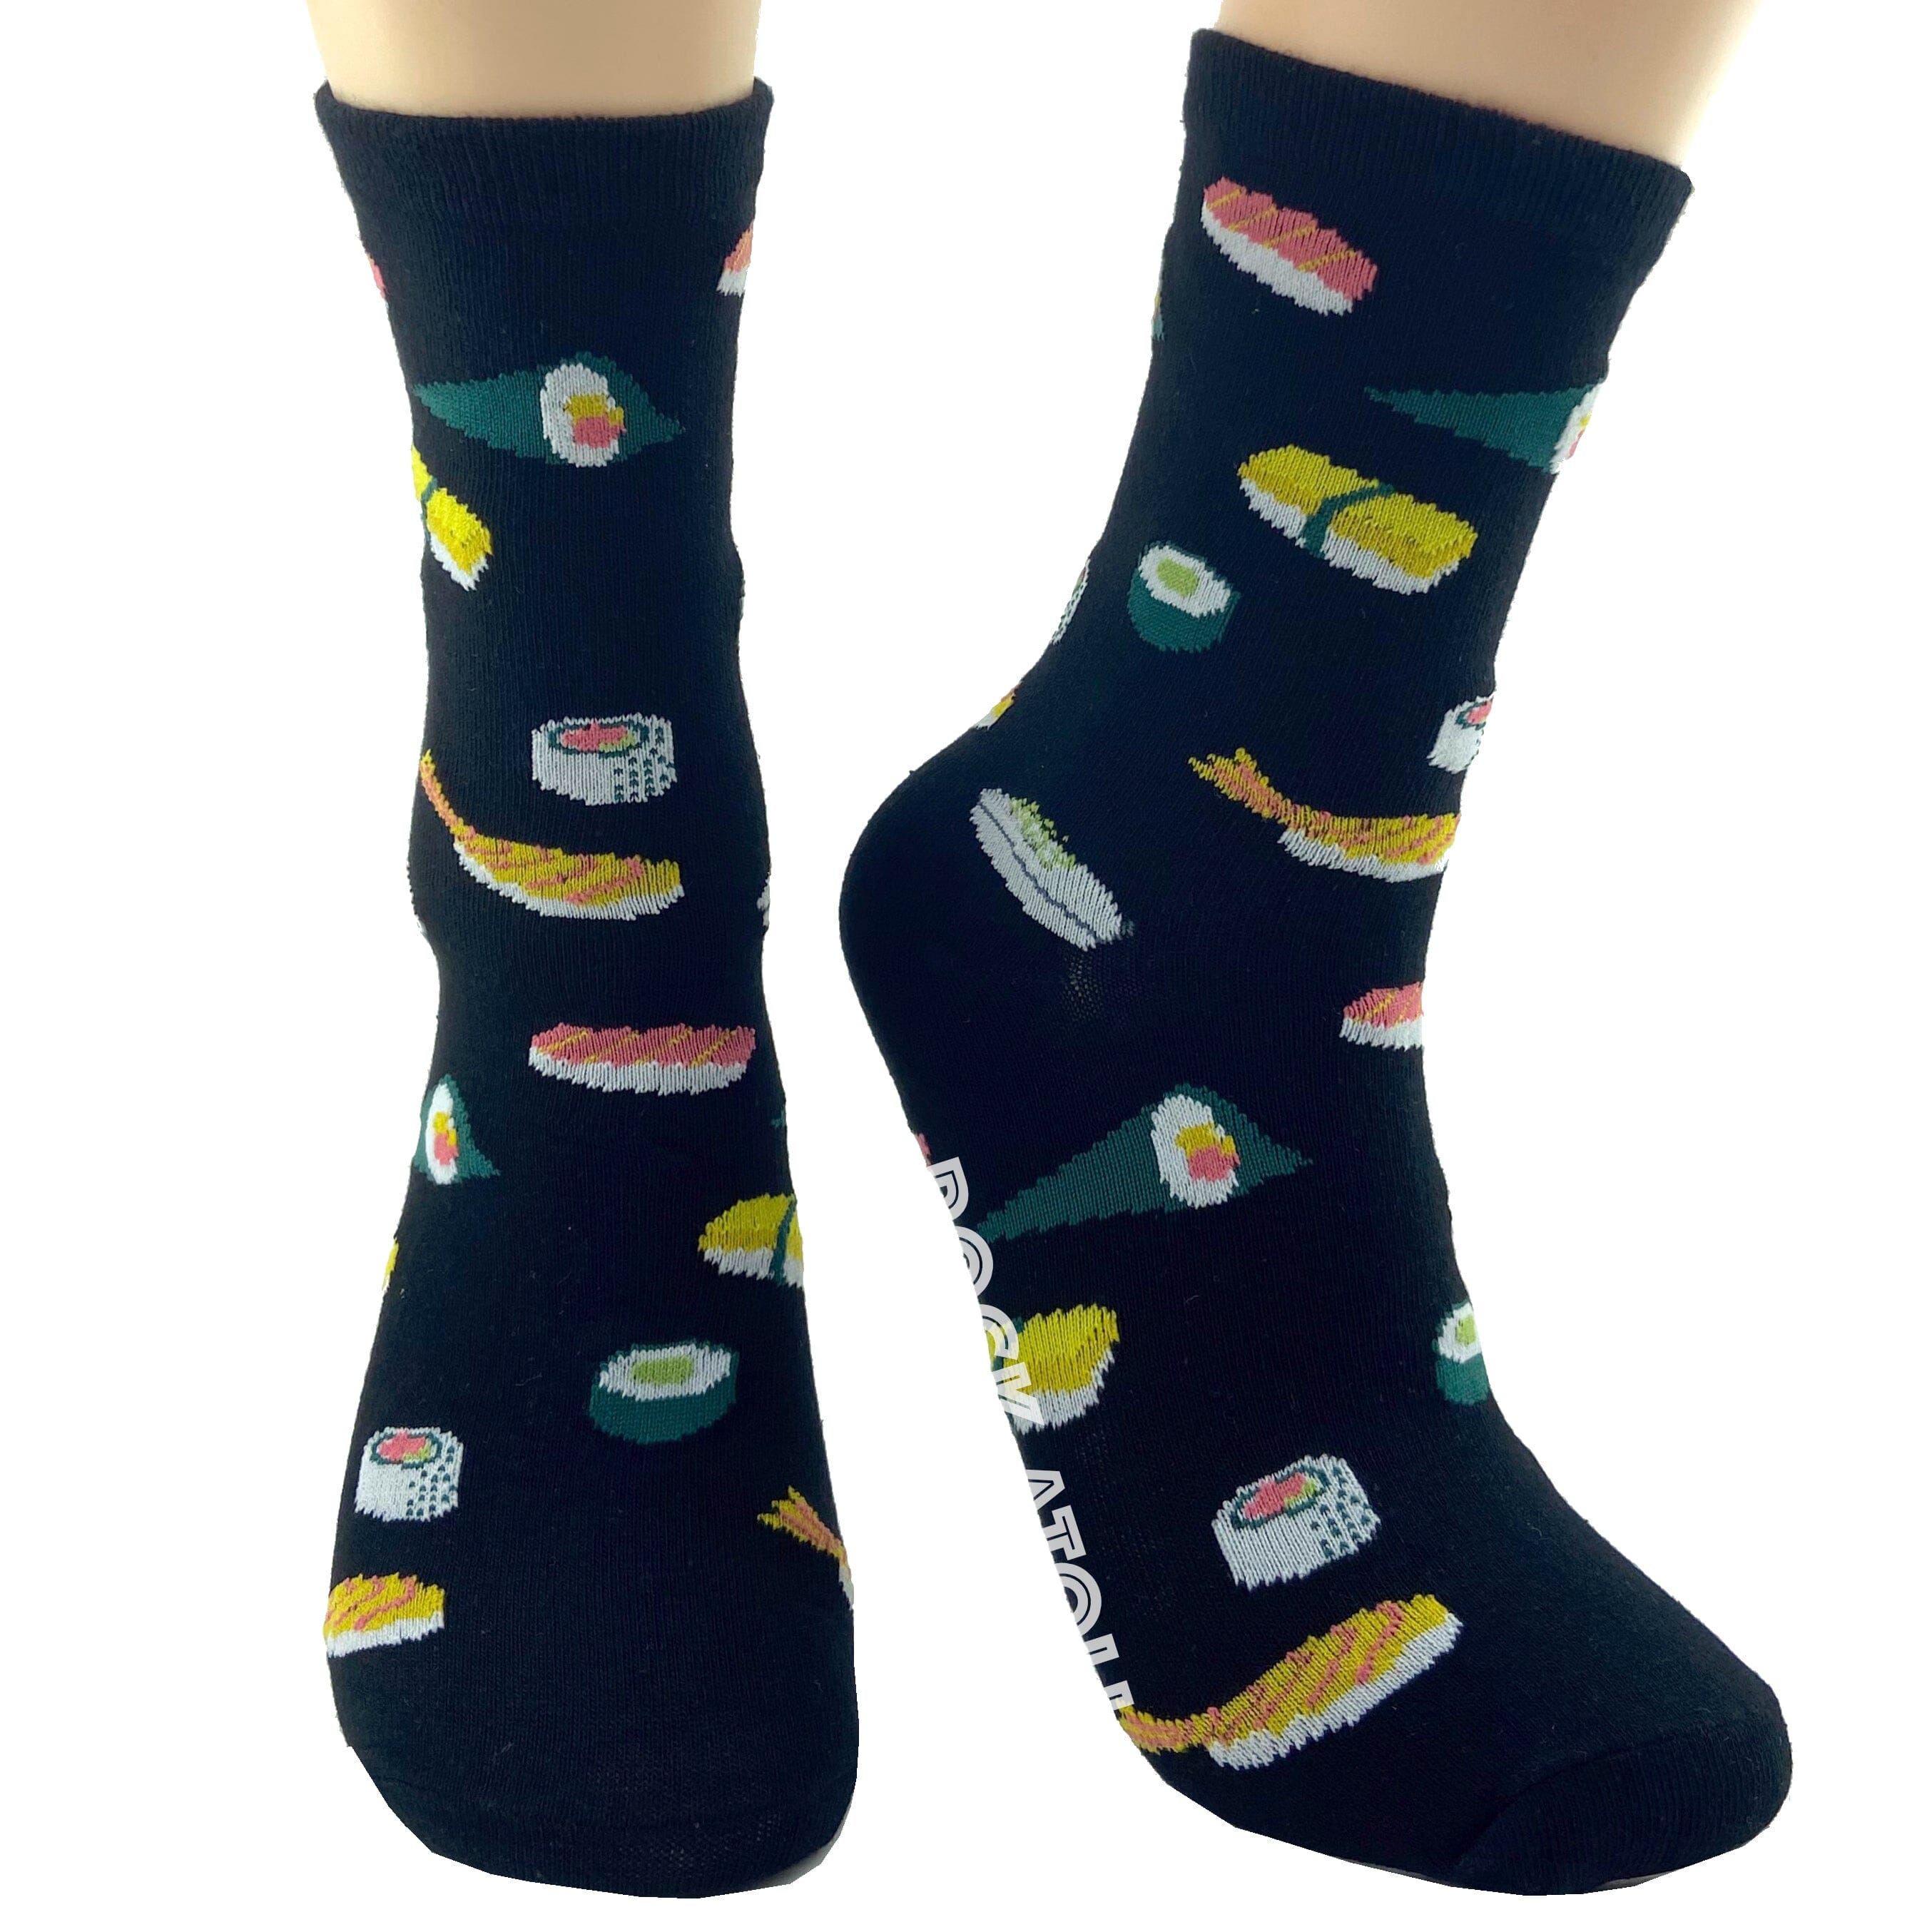 Food Inspired Yummy Sushi Patterned Novelty Socks for Women in Black